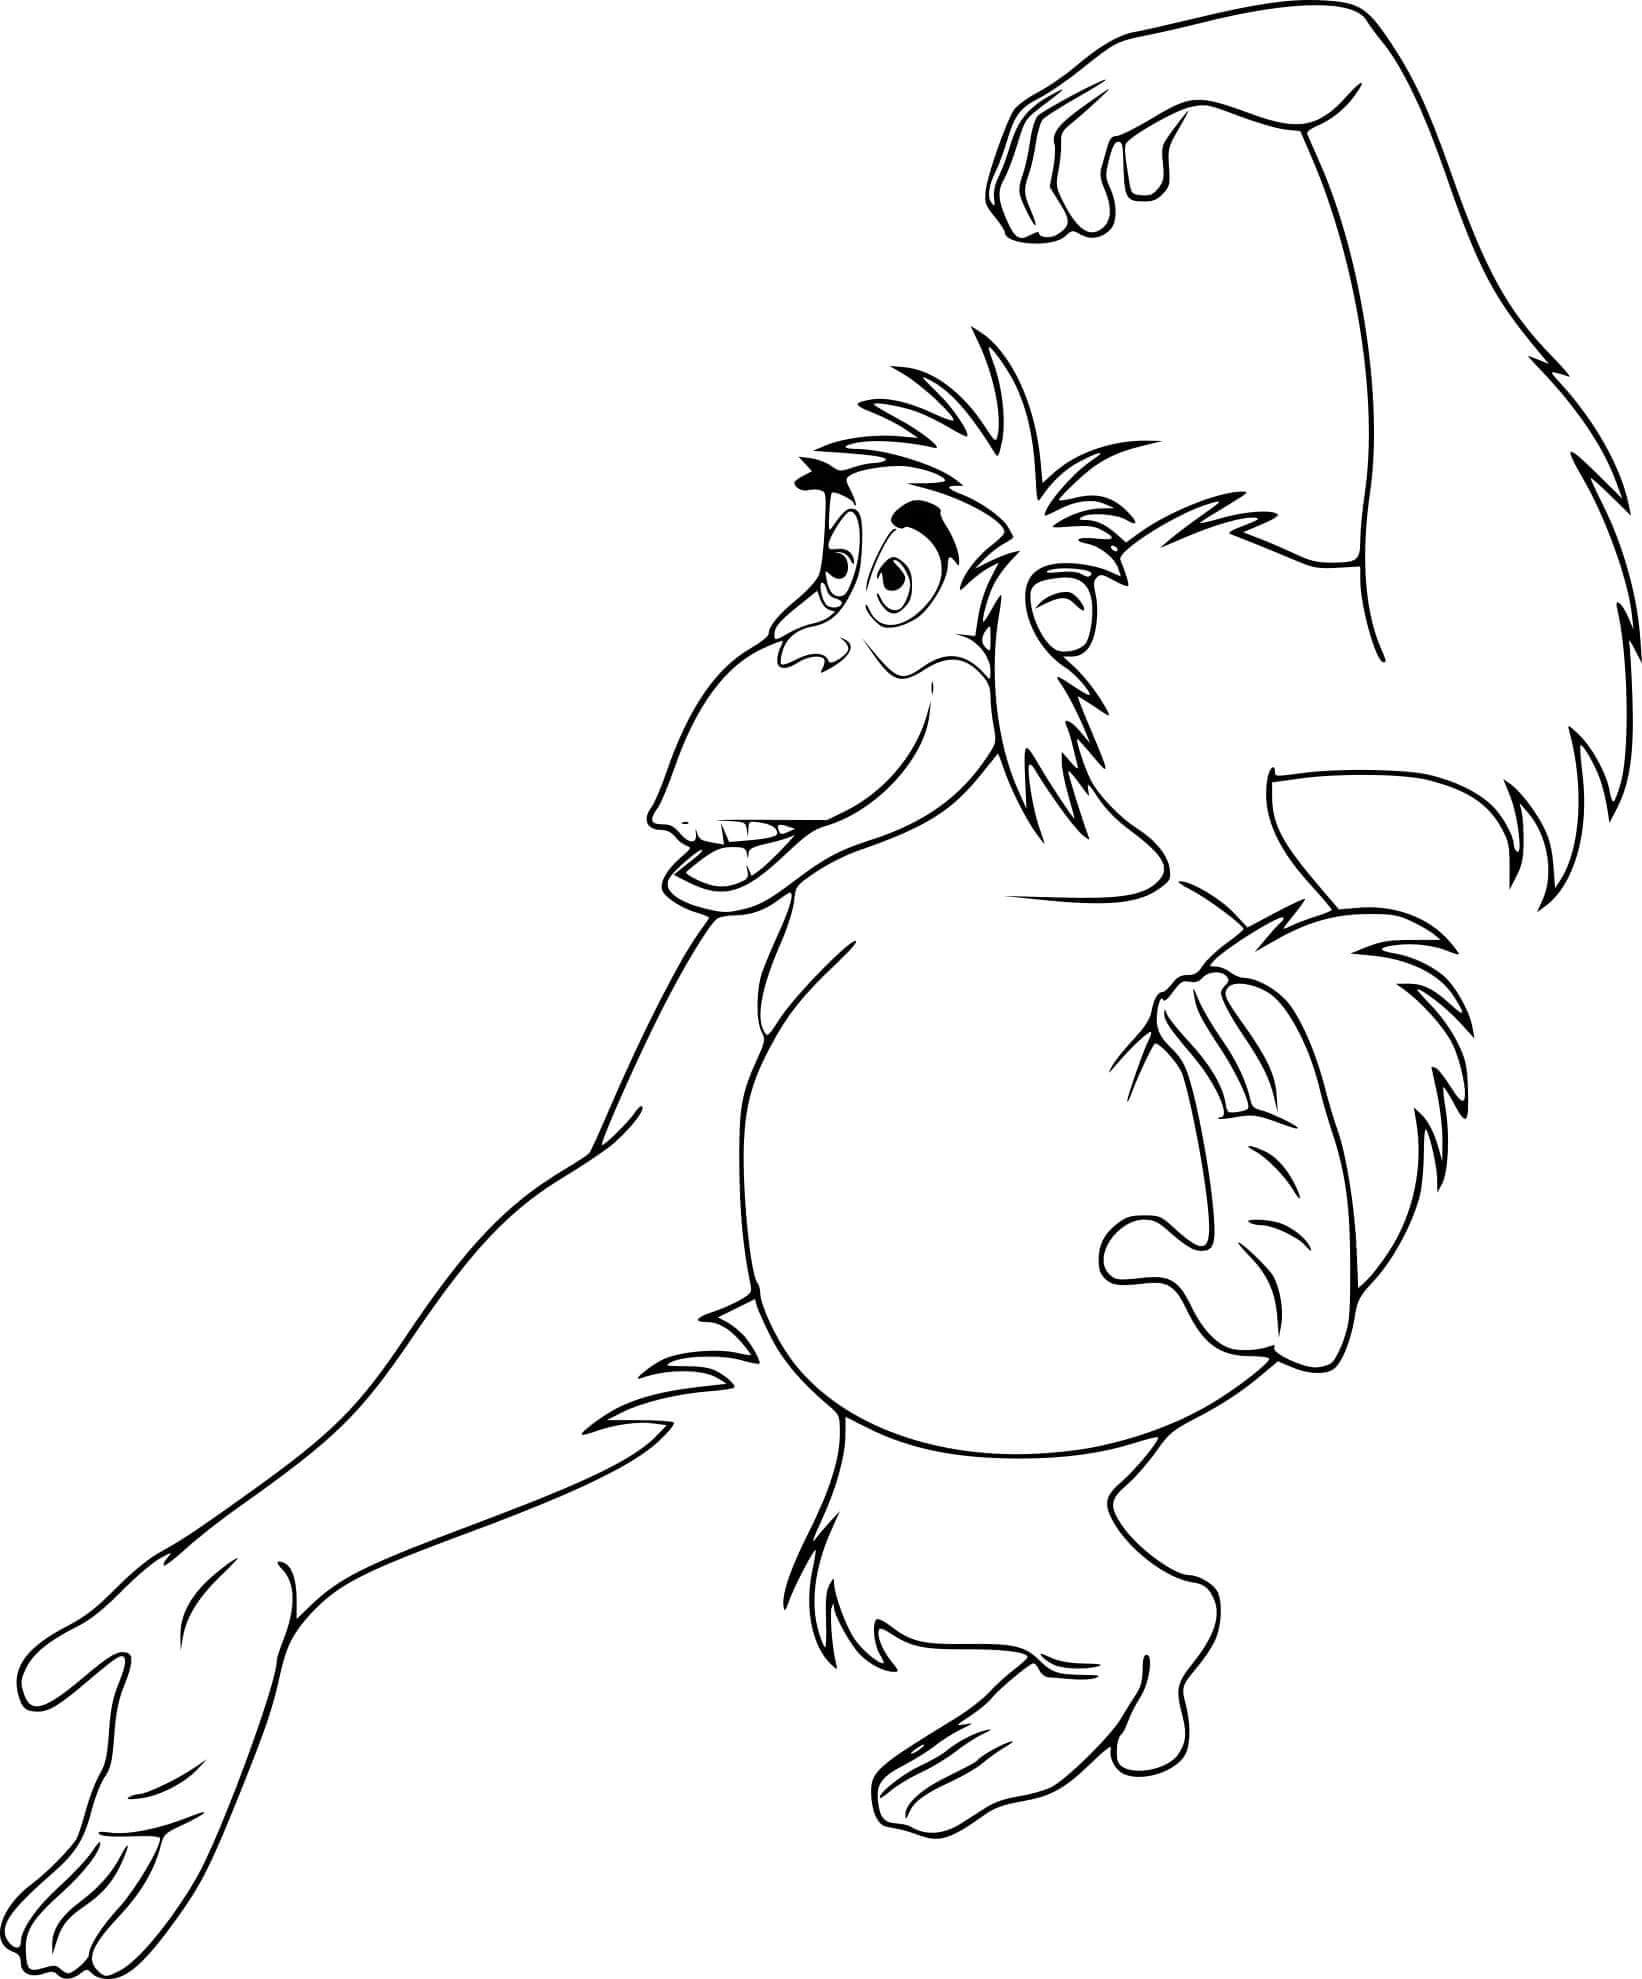 Dibujos de Gorila de Divertidos Dibujos Animados para colorear